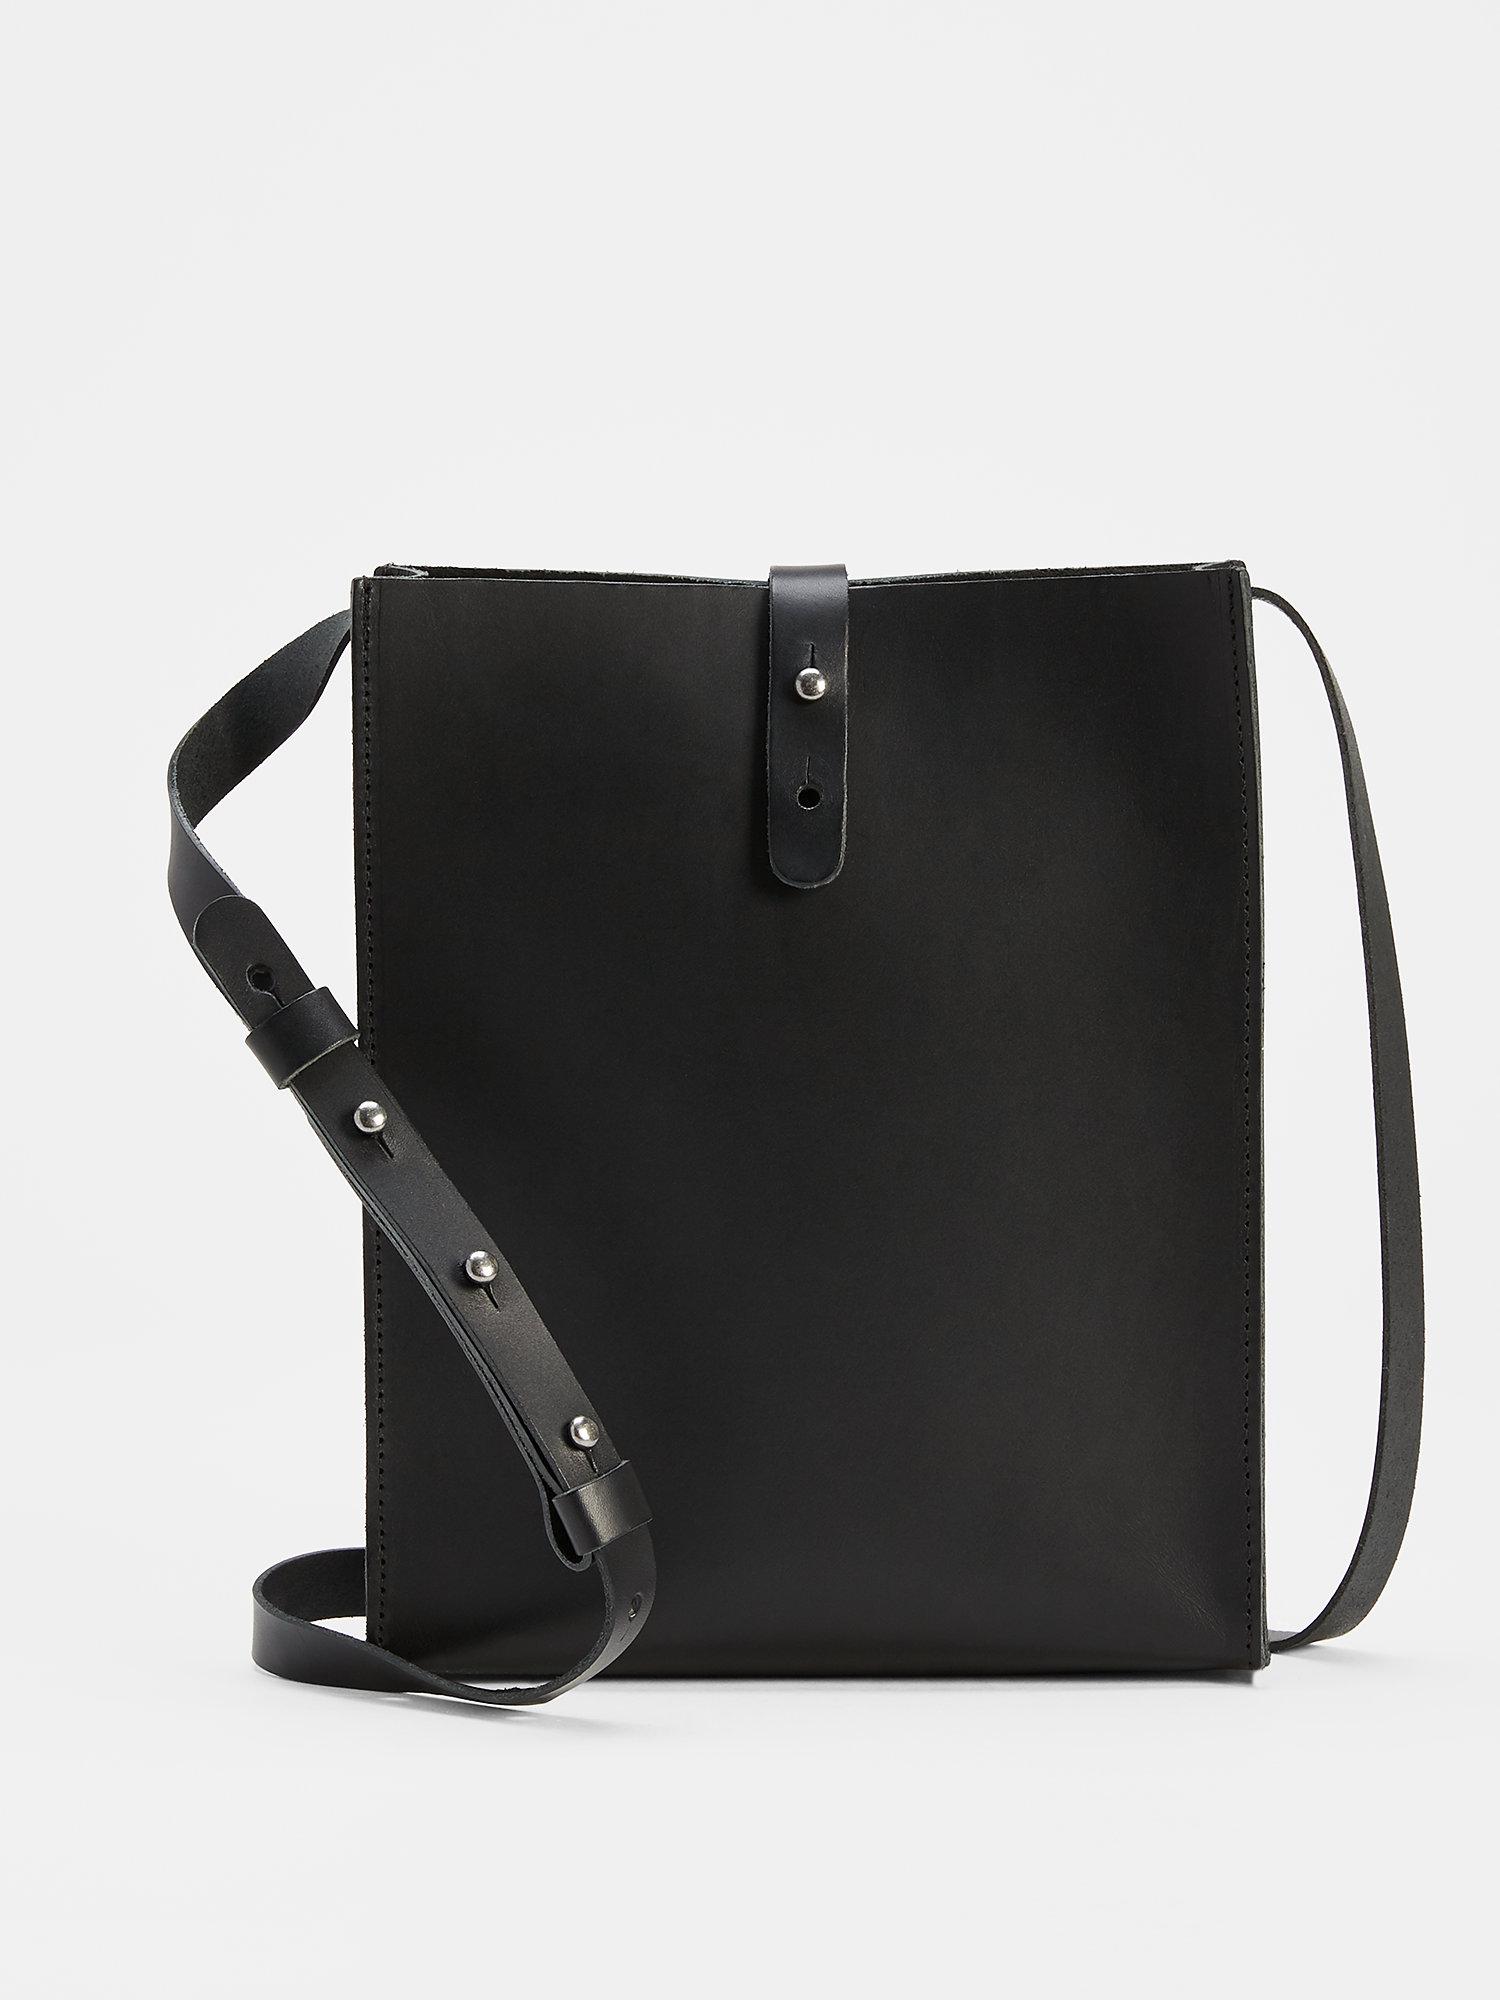 Eileen Fisher Vegetable Tanned Italian Leather Crossbody Bag in Black - Lyst